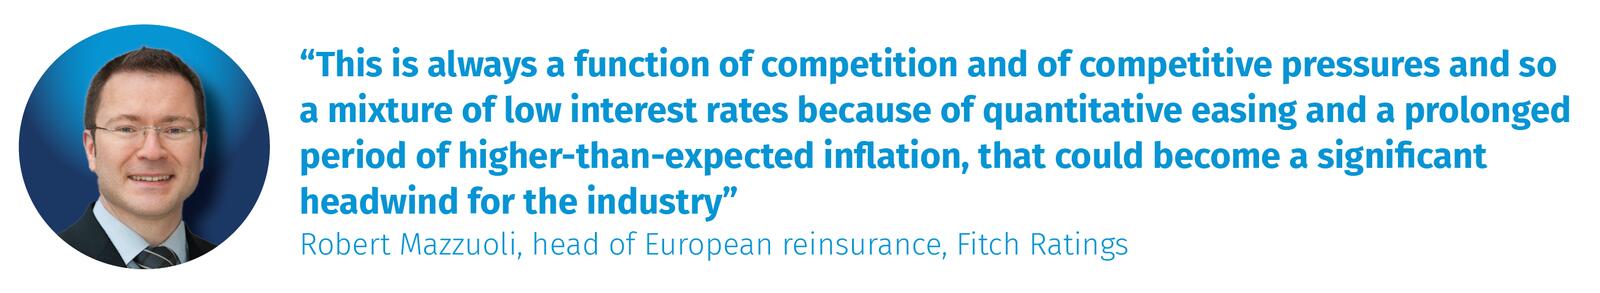 Robert Mazzuoli, head of European reinsurance, Fitch Ratings (1)